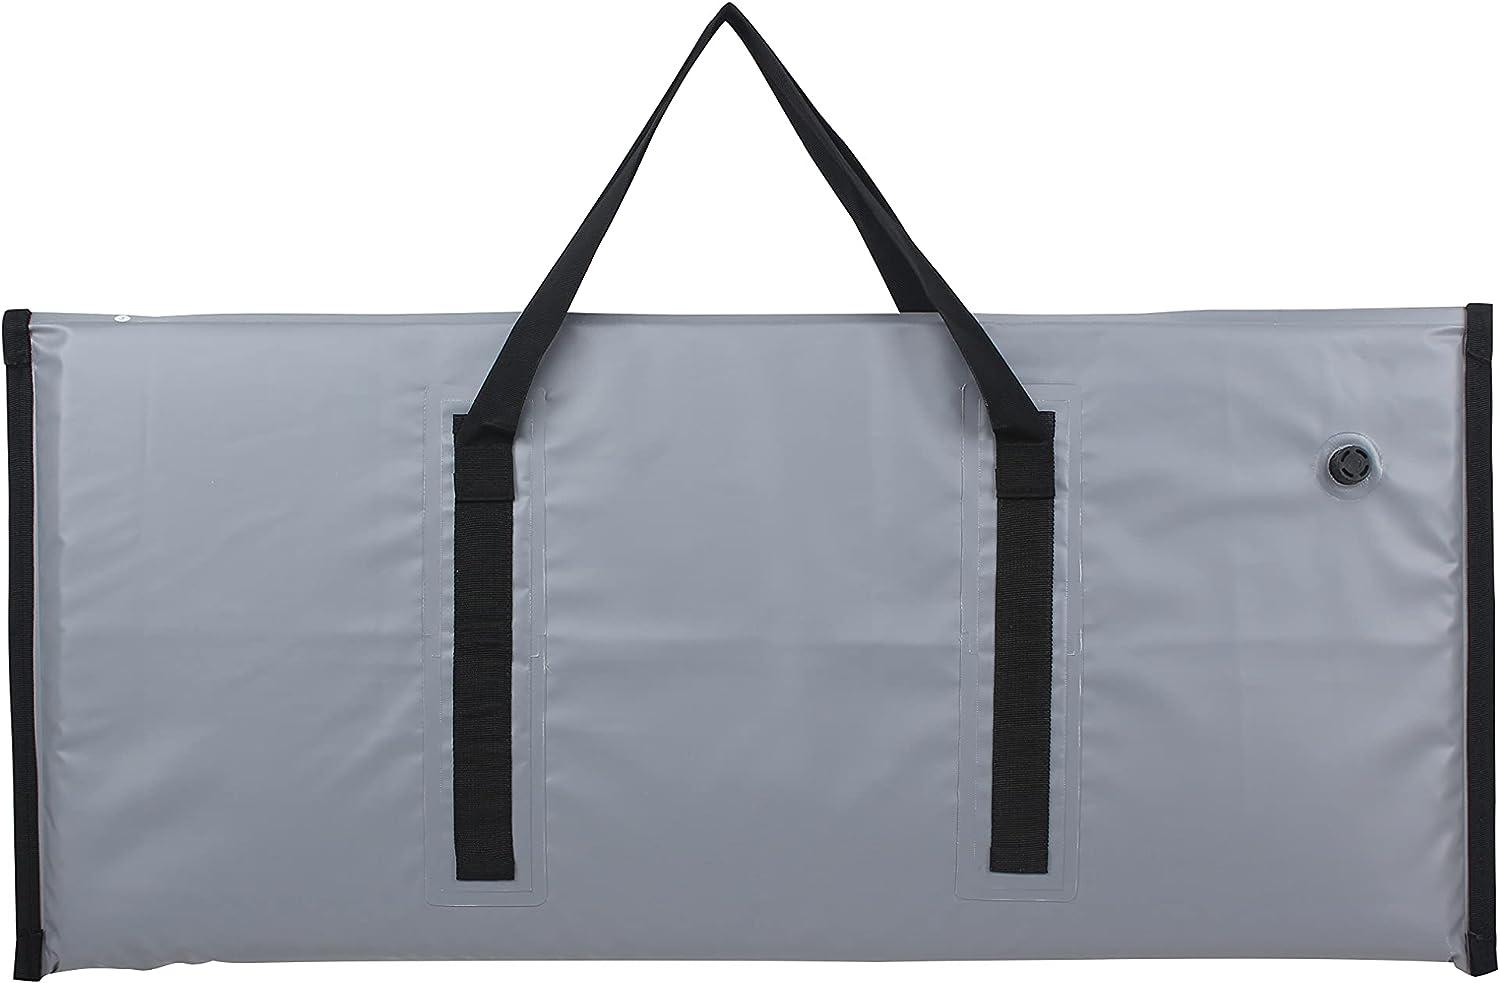 Buffalo Gear Insulated Fishing Bait Bag,20×18in Small Fish Cooler